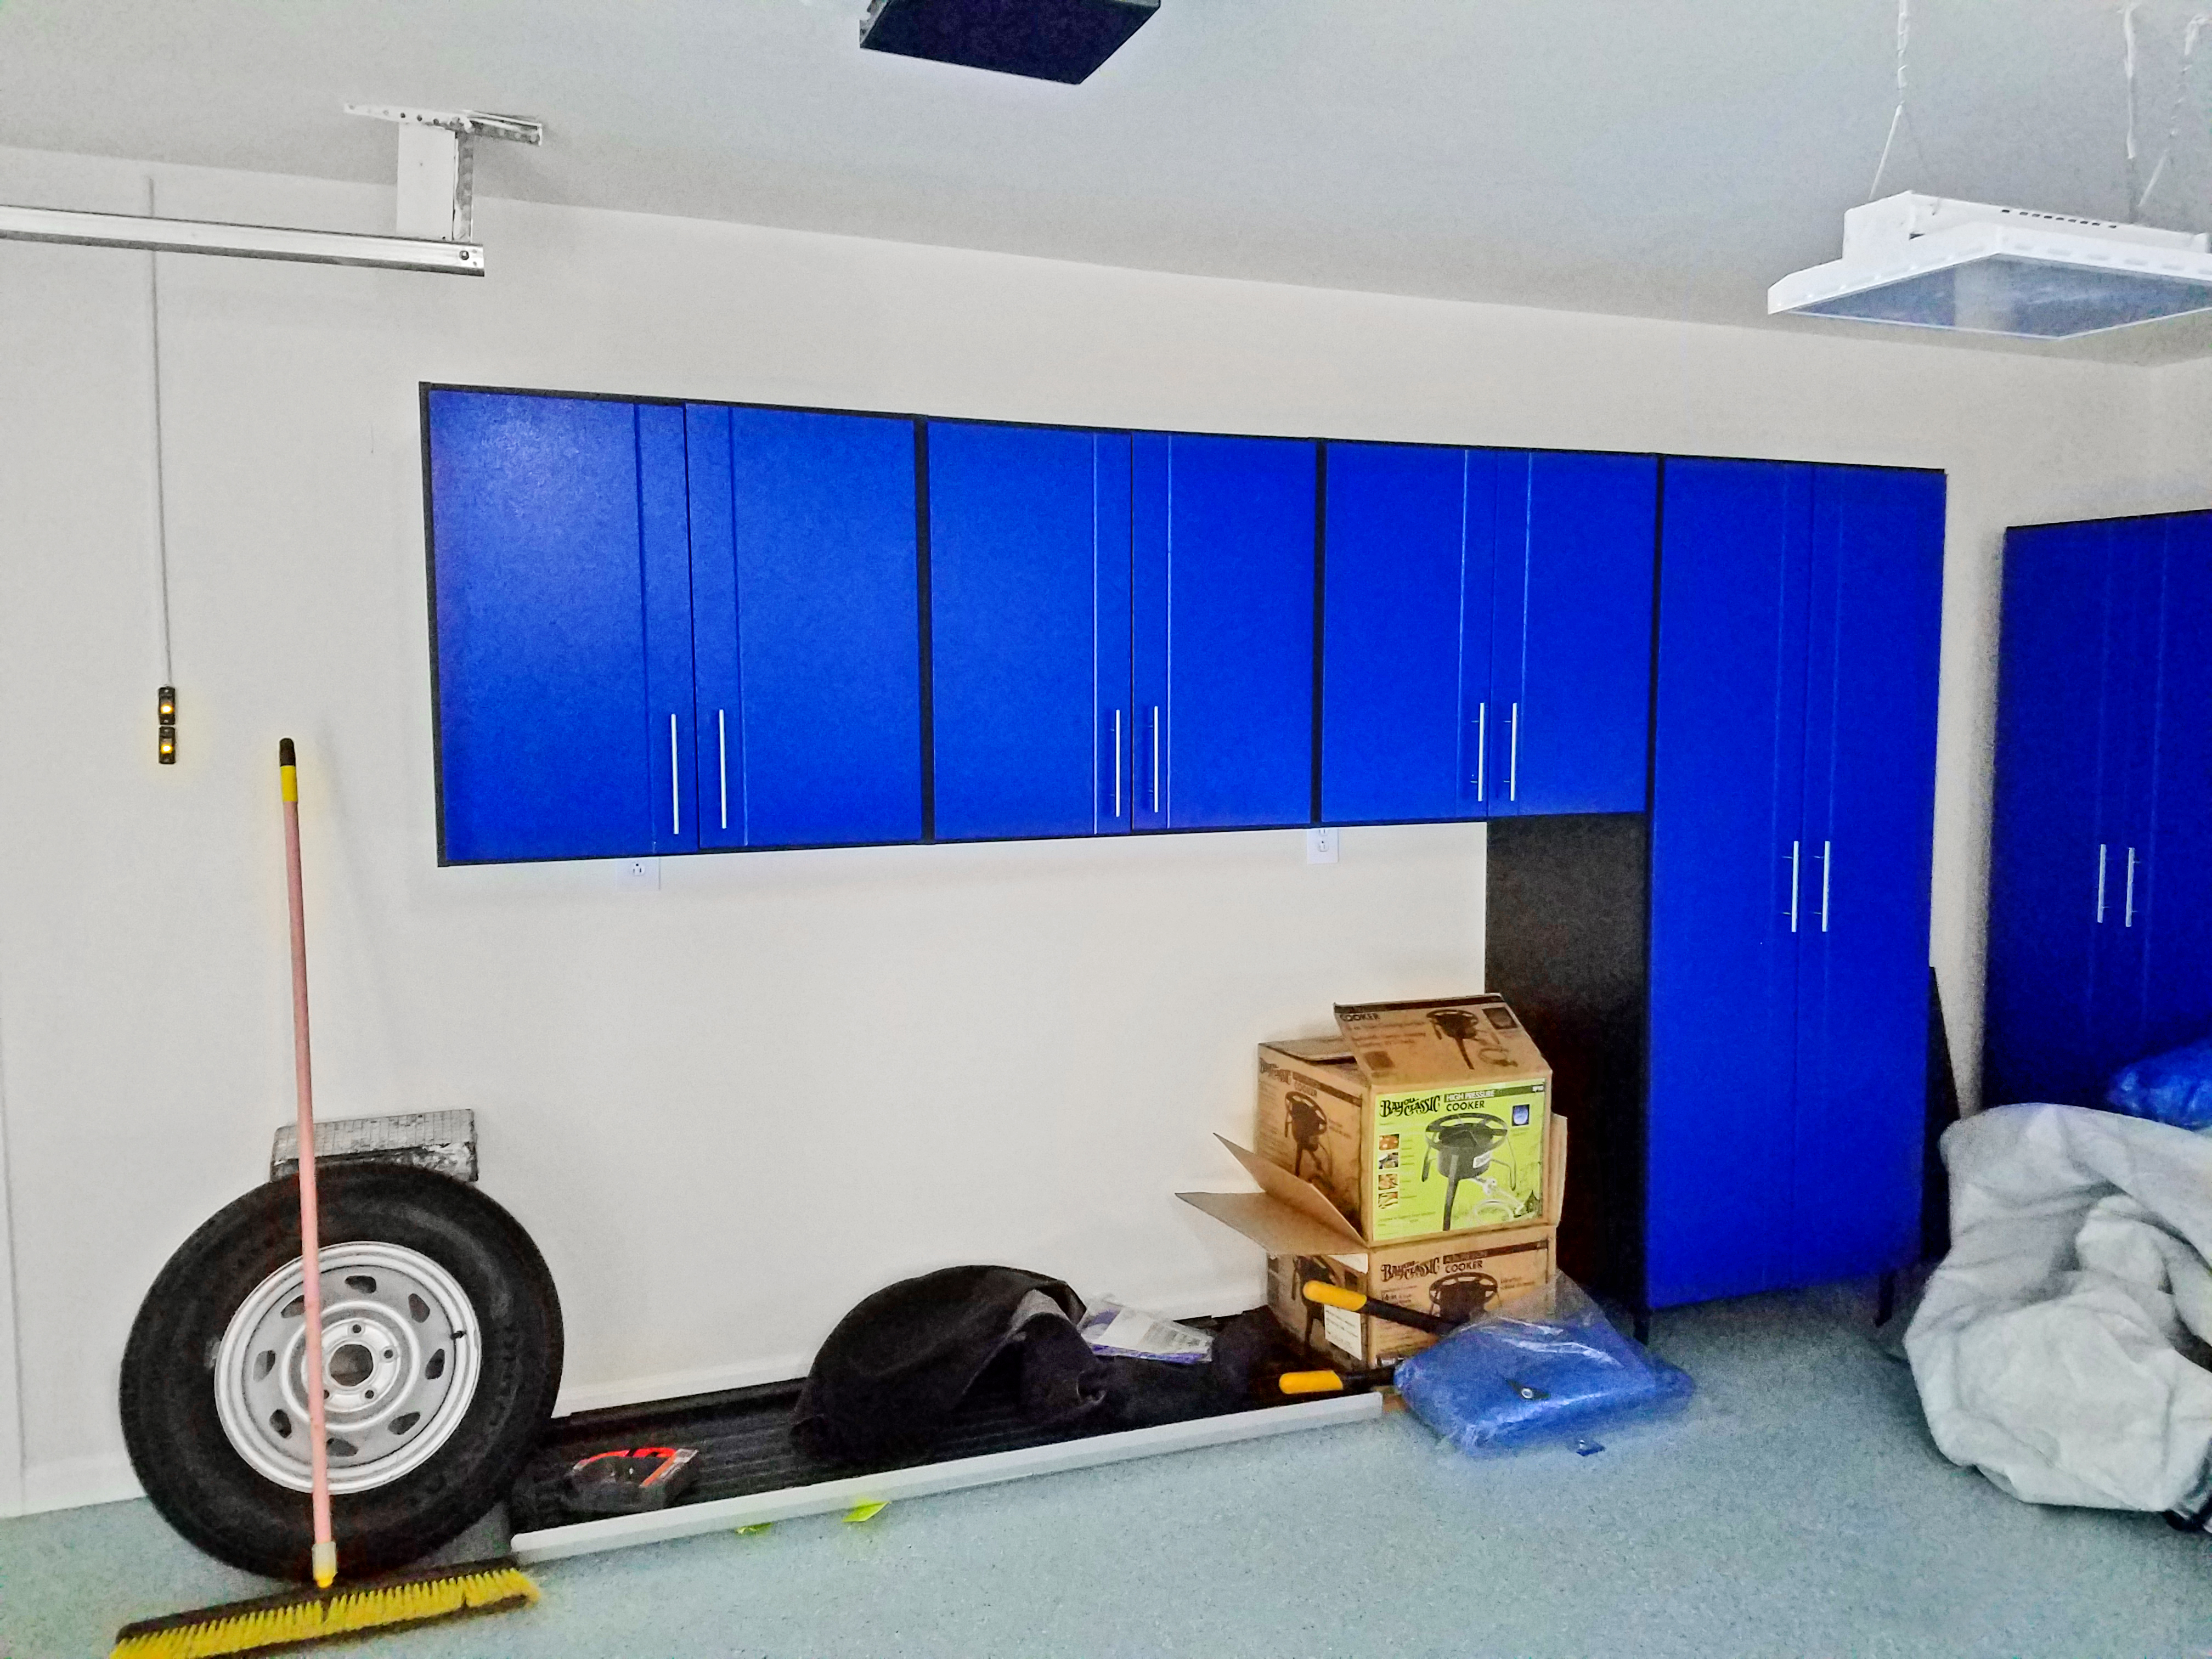 Workspace garage cabinets were custom built for Karen B.